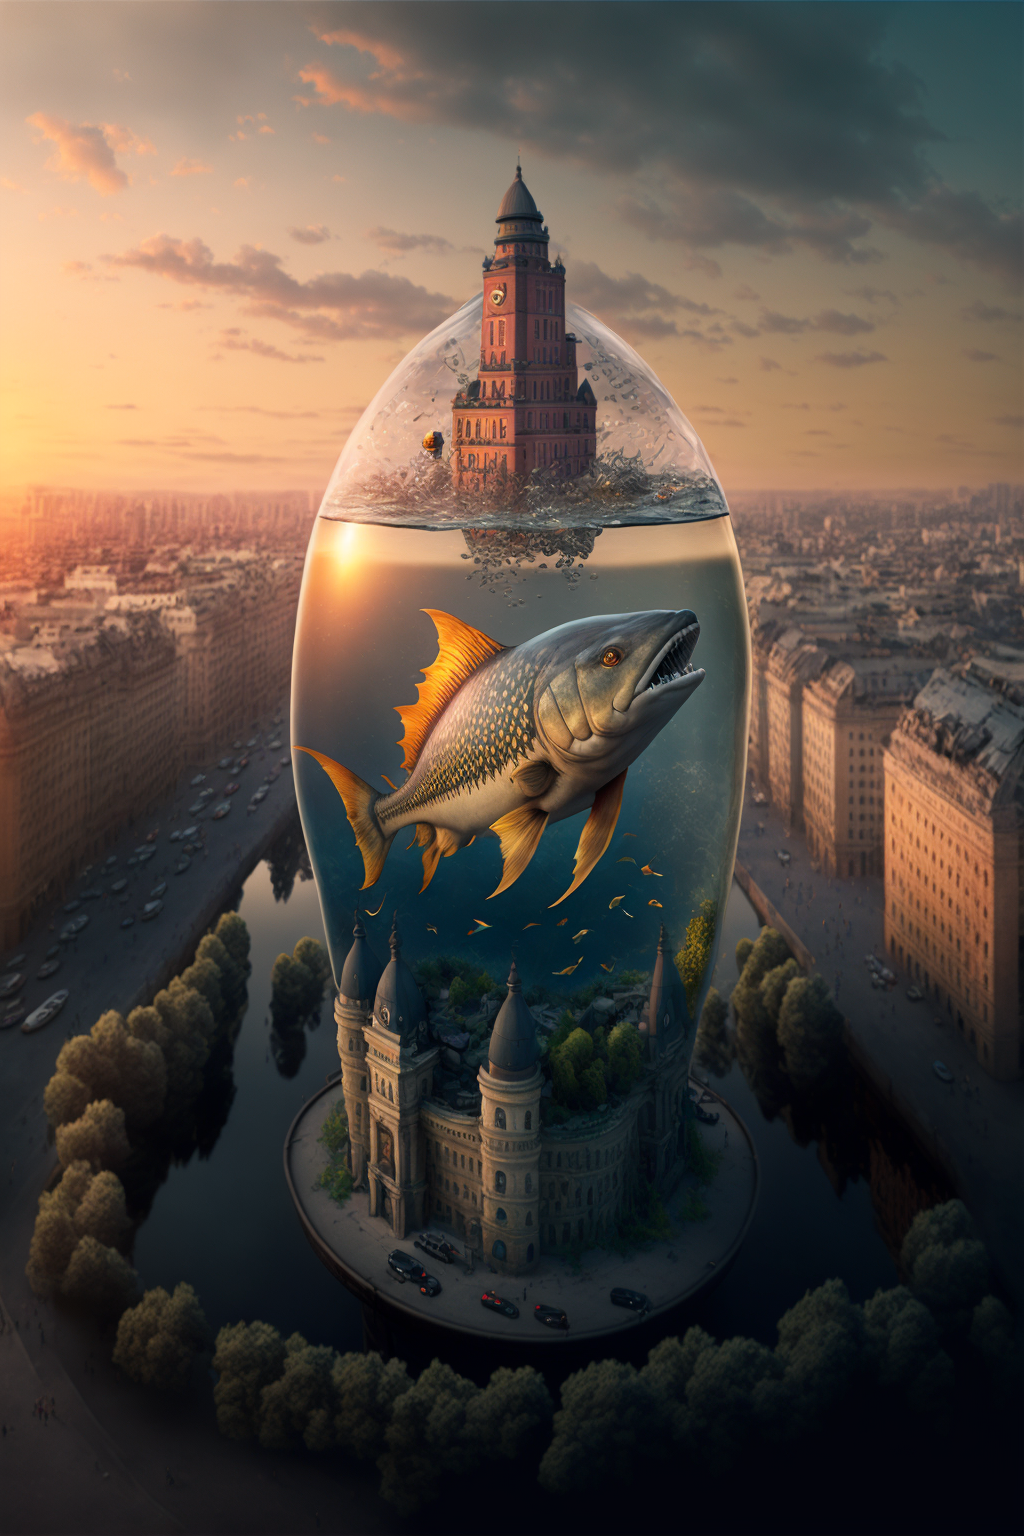 Sergey_Ku_aerial_view_of_a_giant_fish_tank_shaped_like_a_tower__ce30cb08-f011-4c8b-89cf-7a3284...png